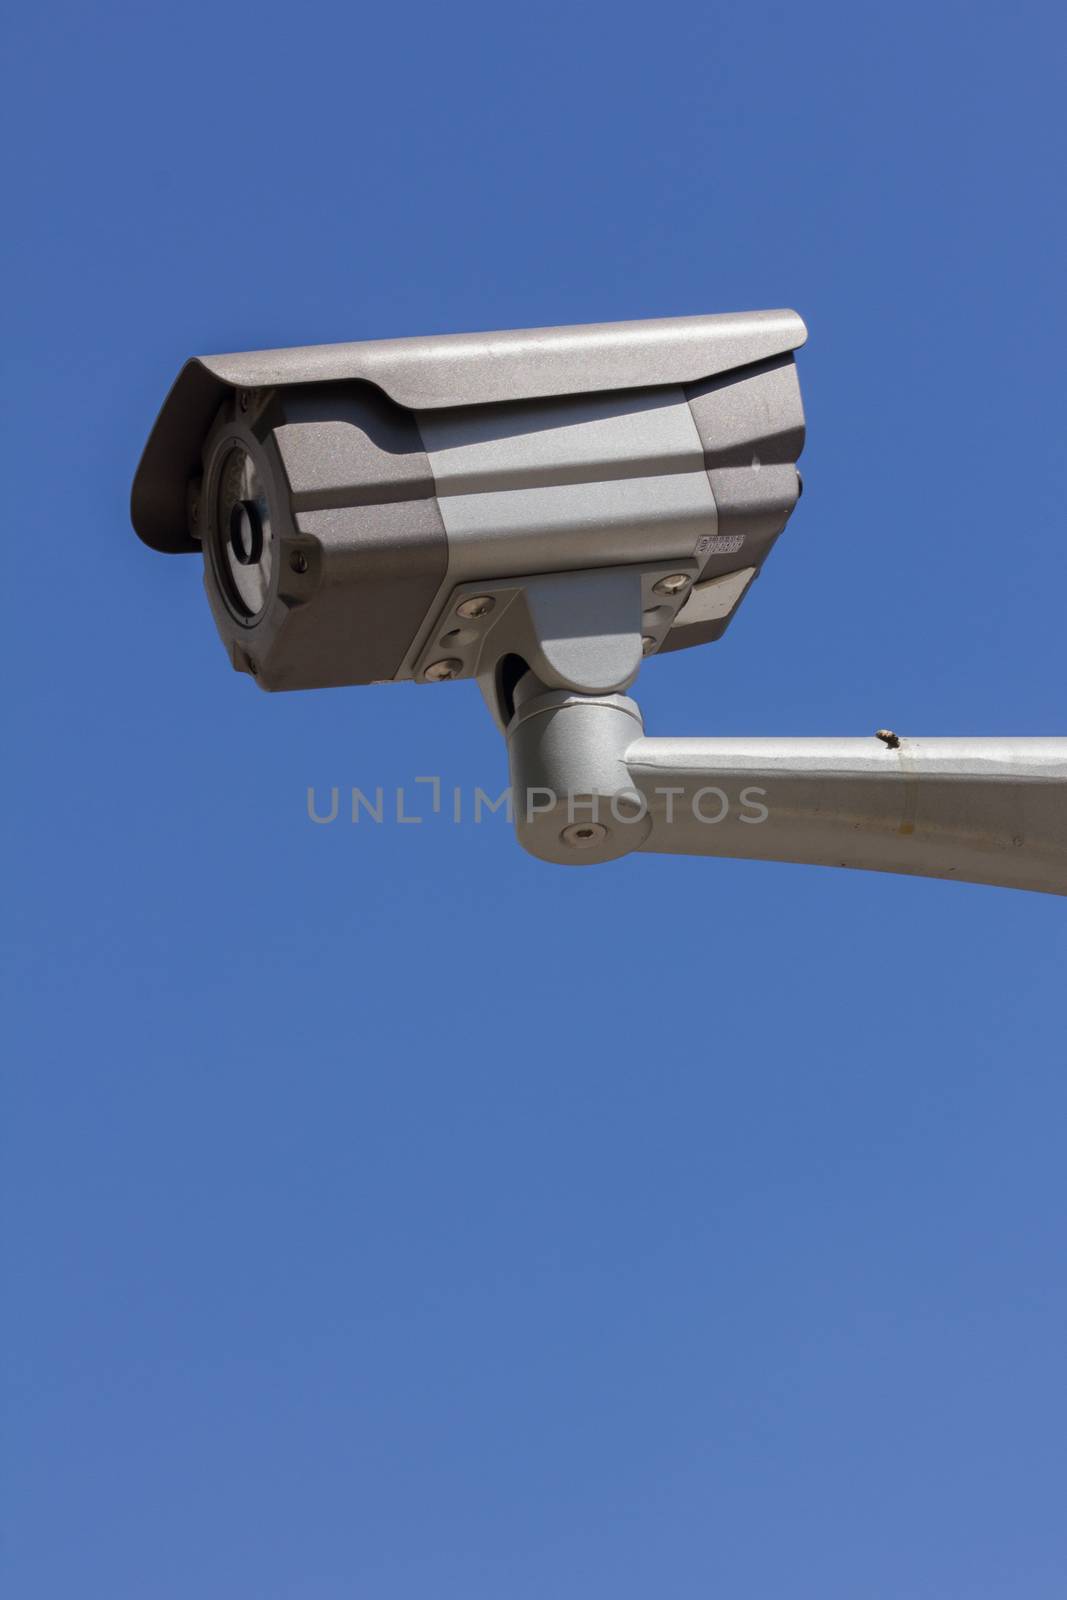 CCTV security camera, blue sky background.